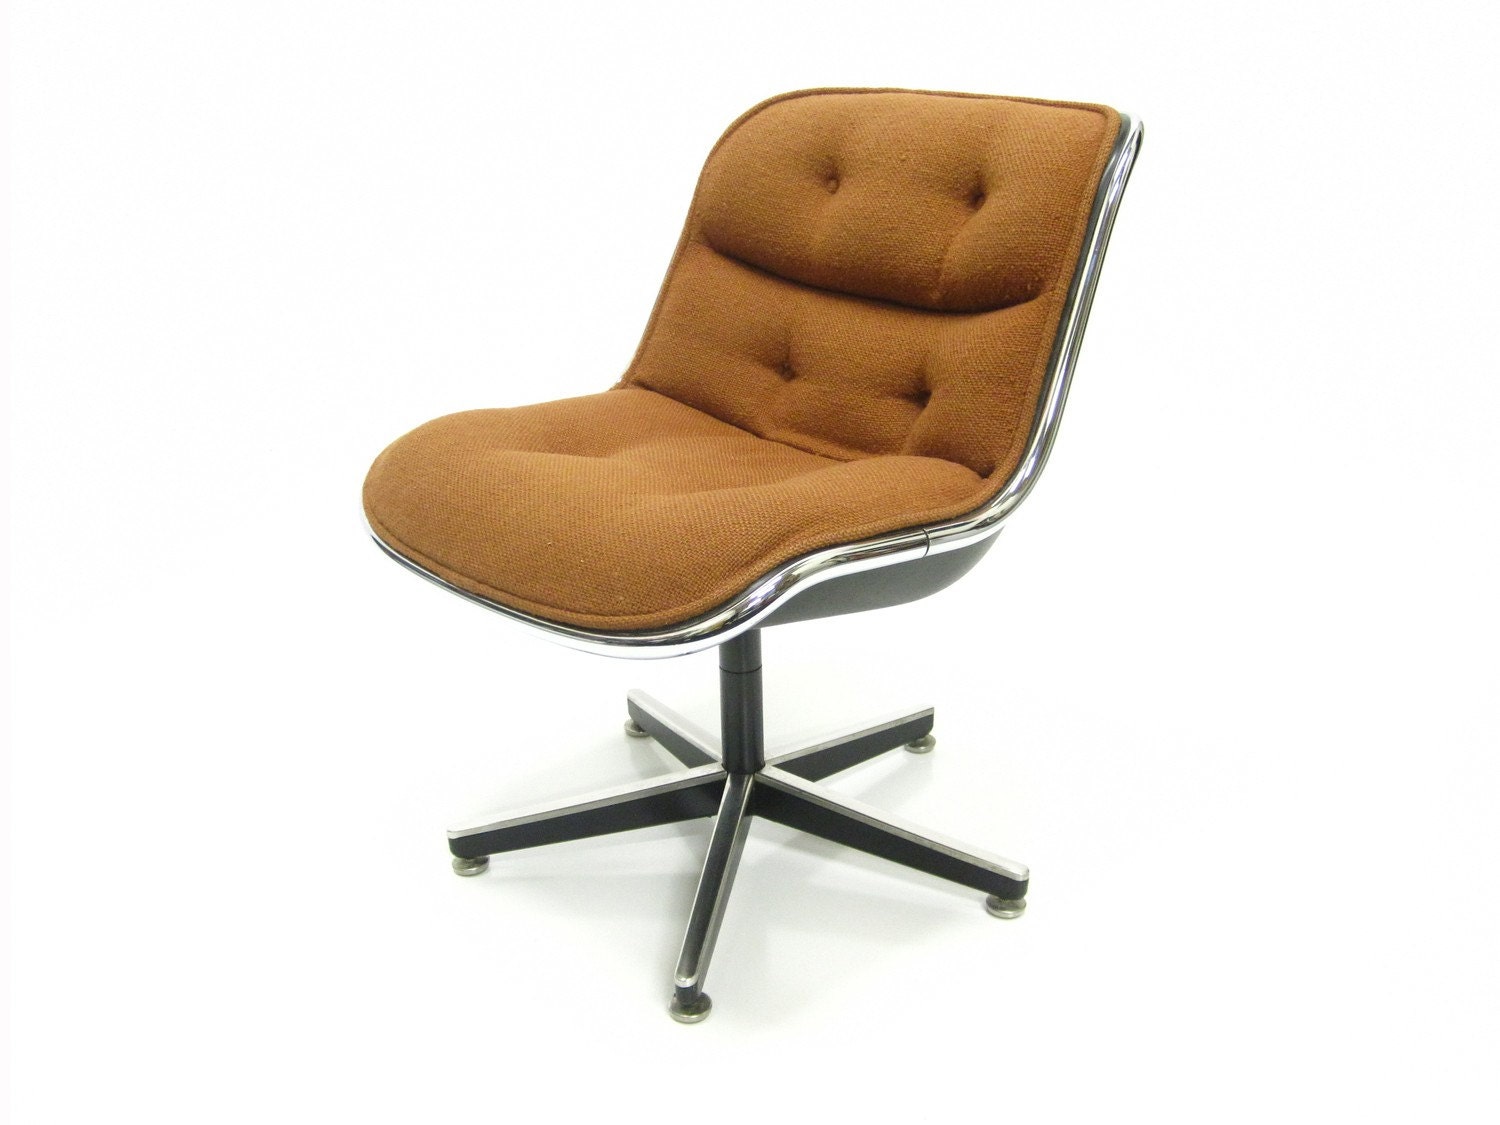 10% SALE - Vintage Modern Knoll Pollock Client Chair